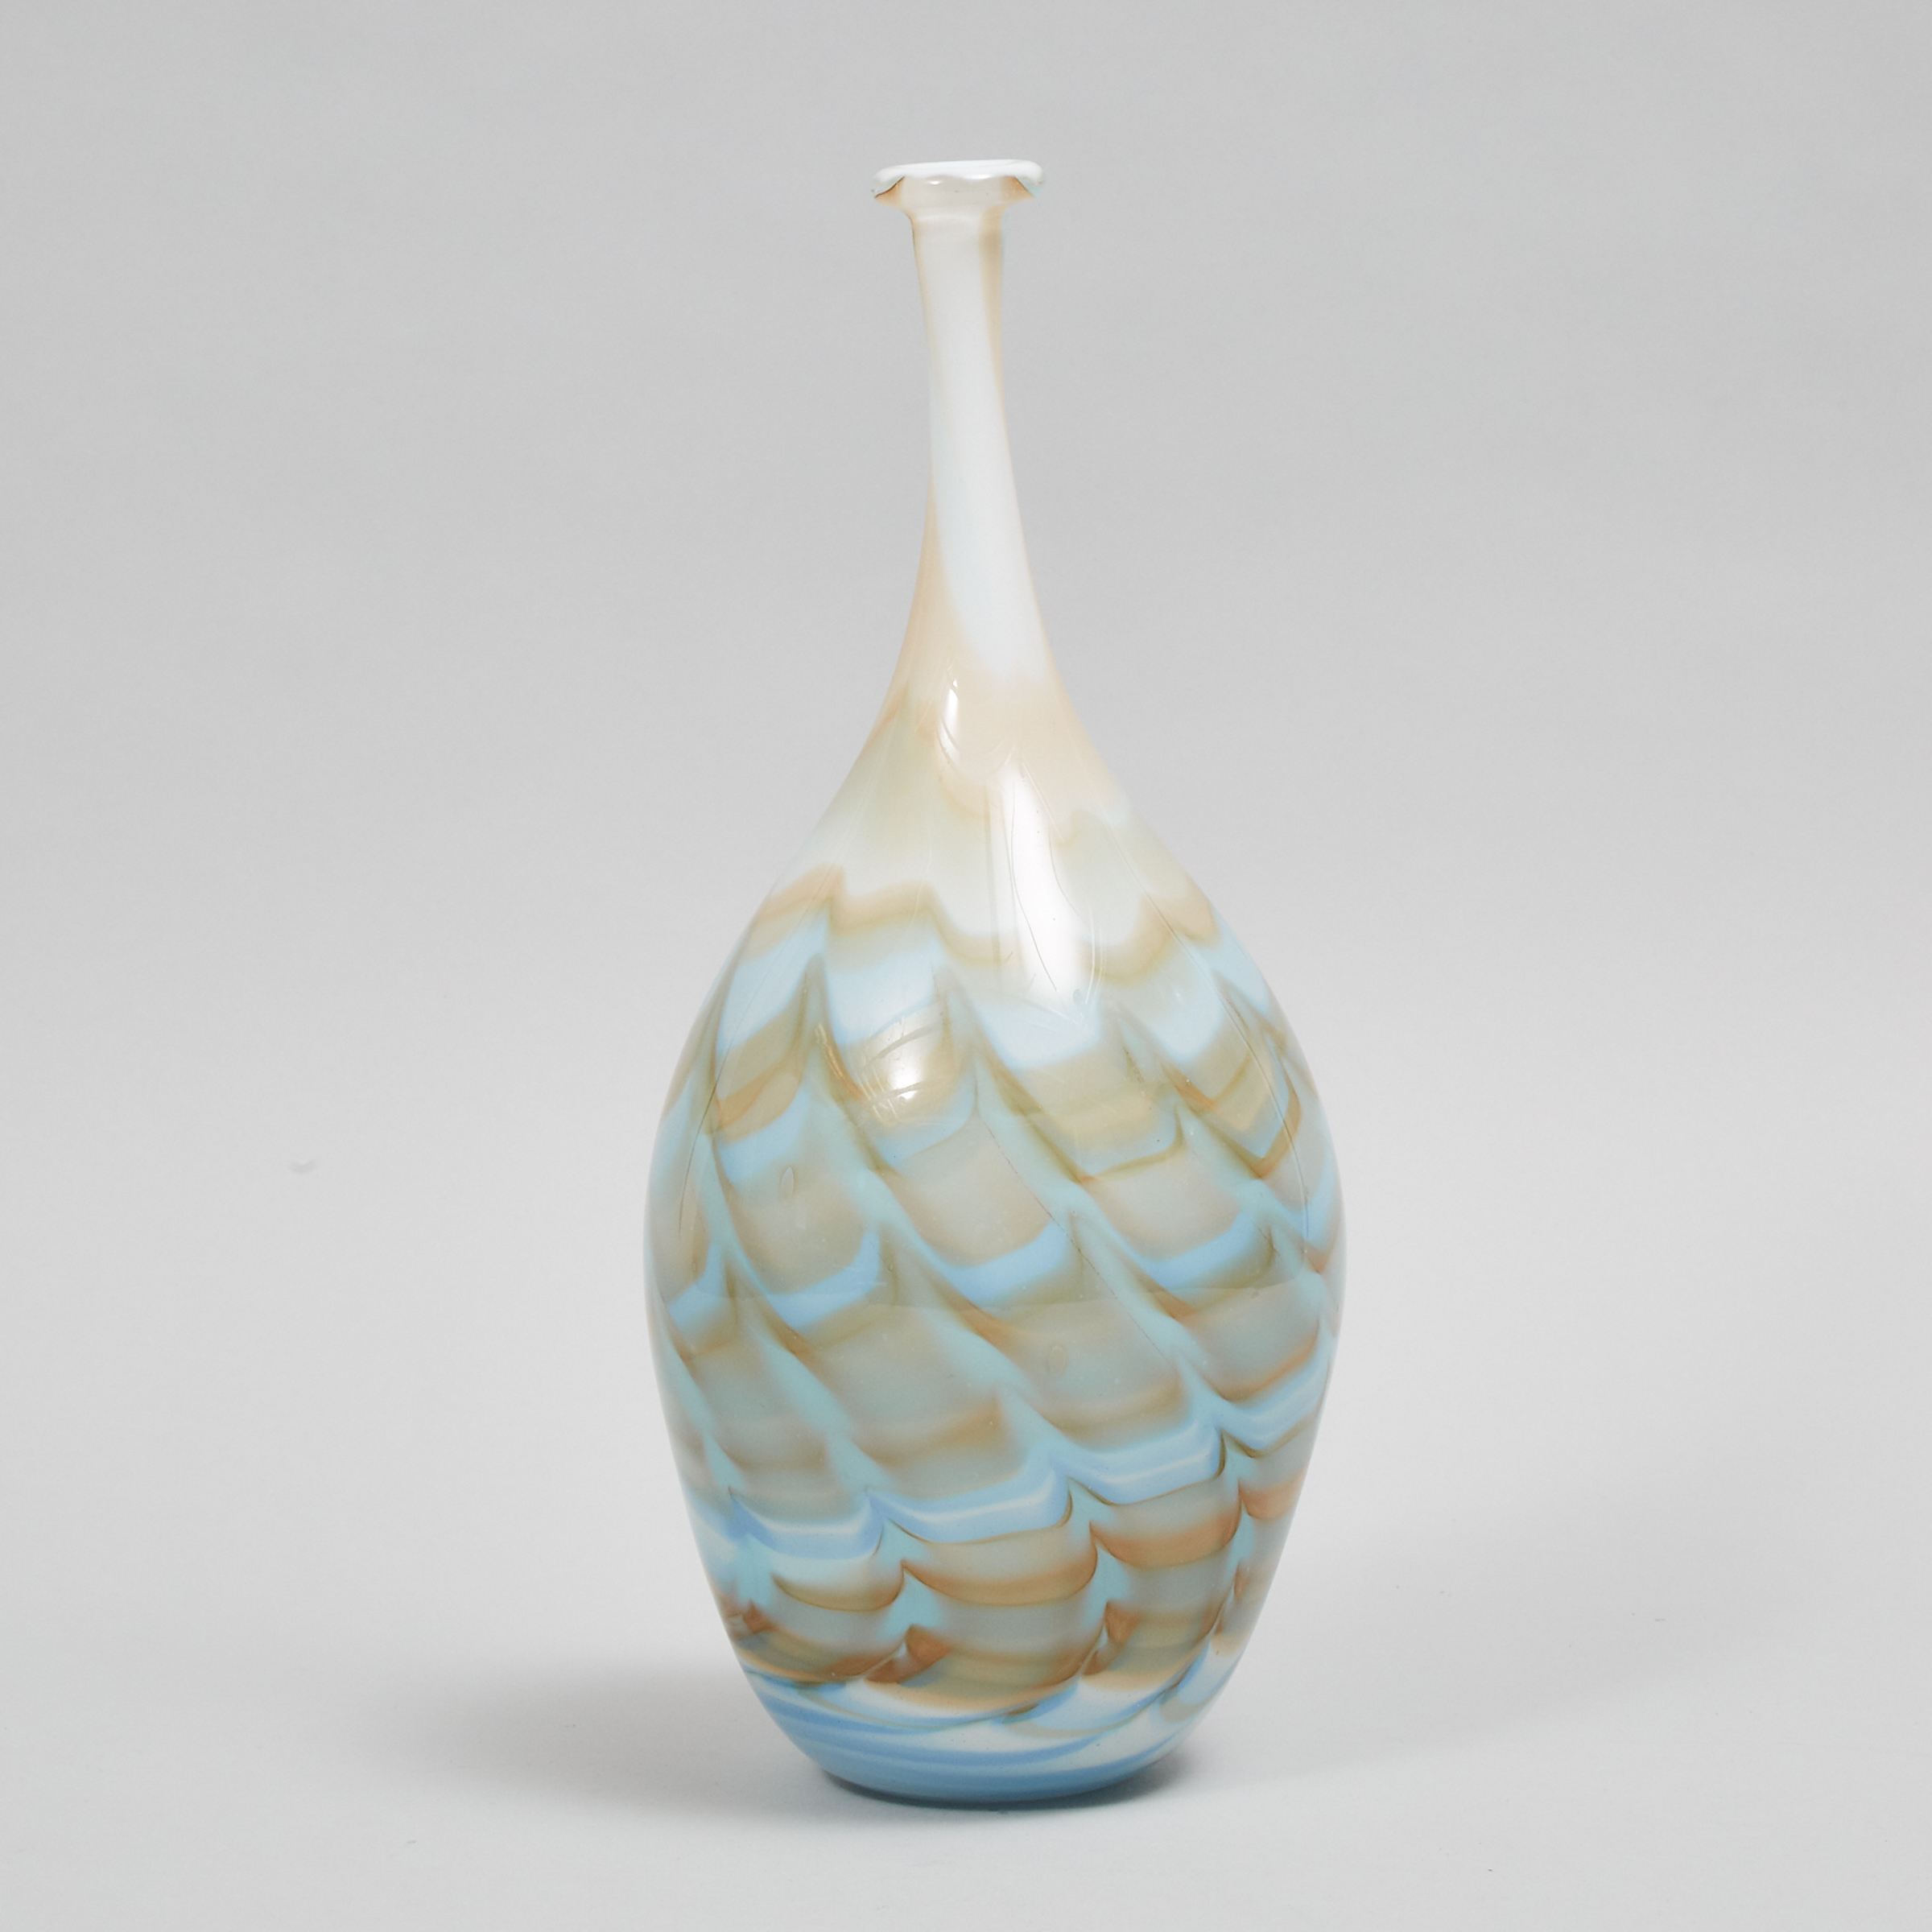 Robert Held (American-Canadian, b.1943), Glass Vase, 1976